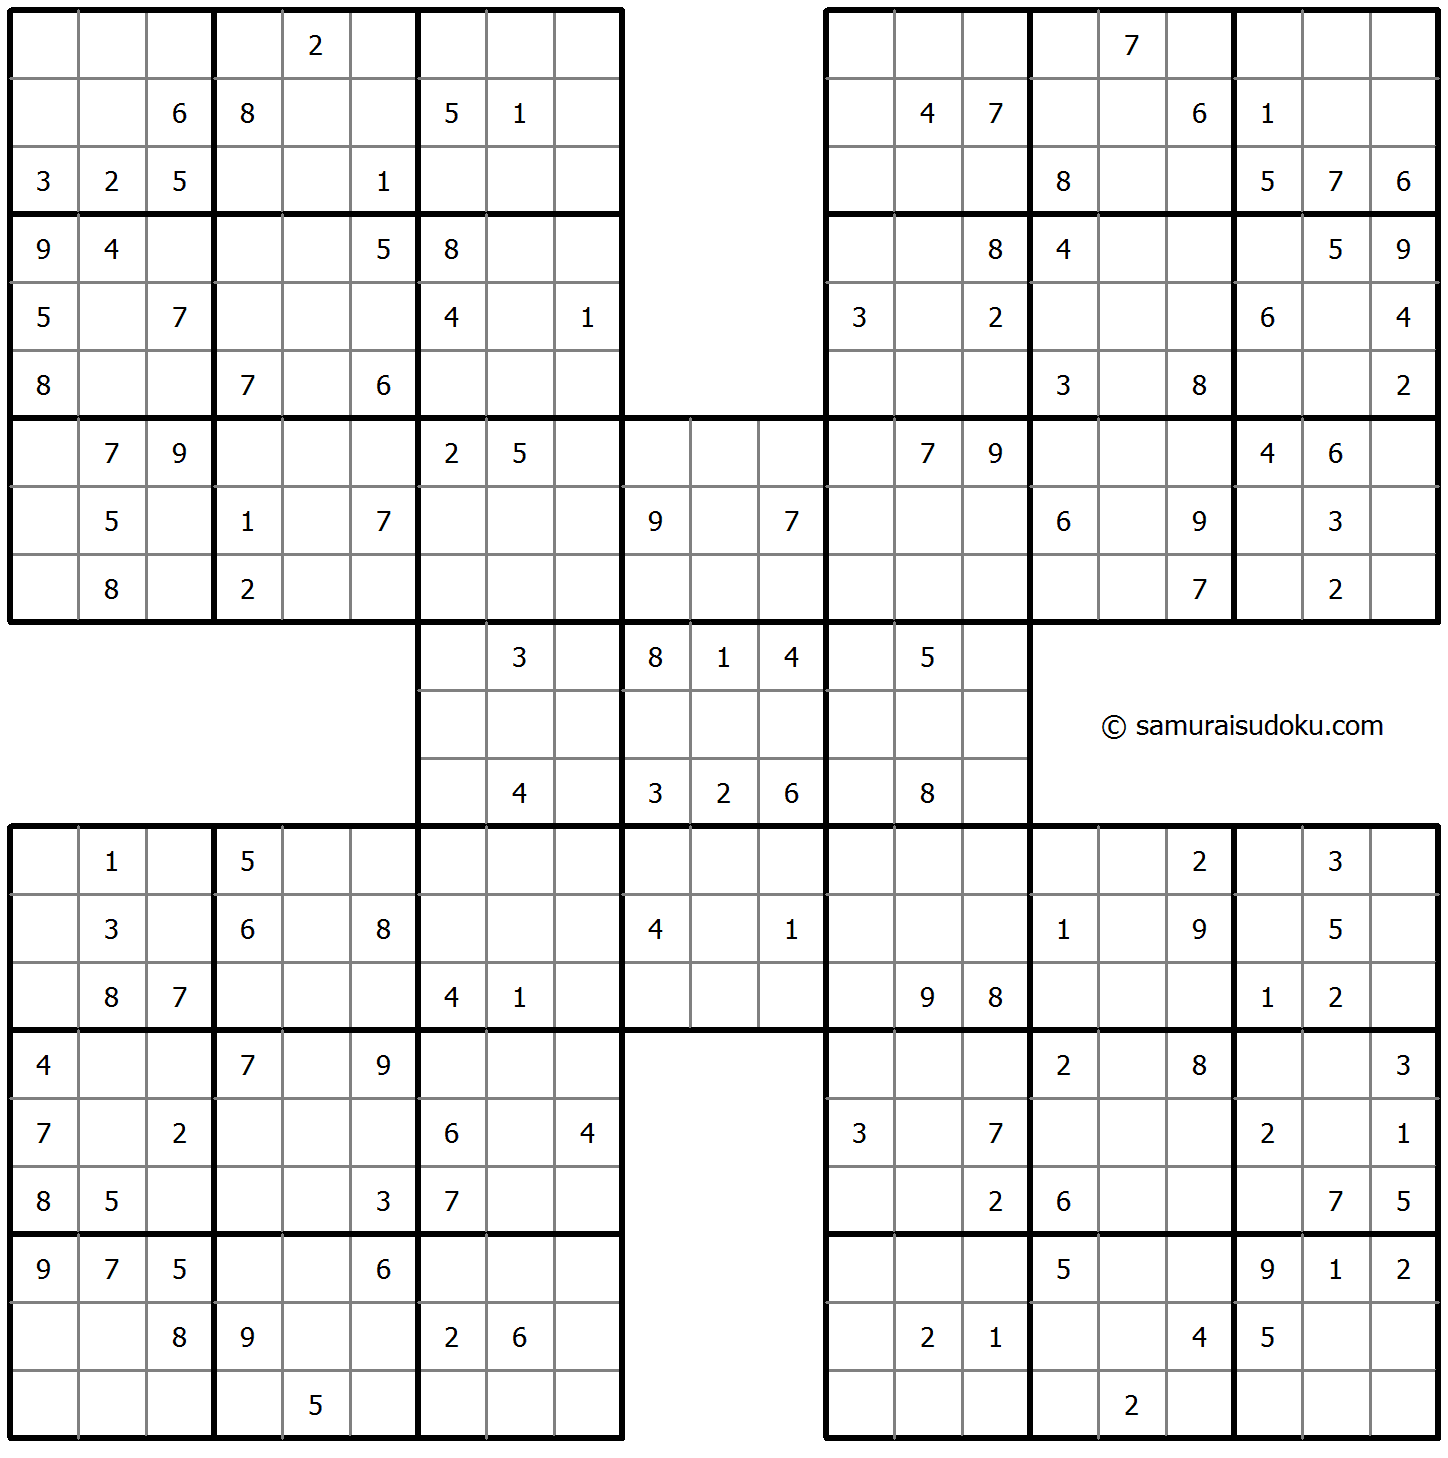 Samurai Sudoku 30-May-2021